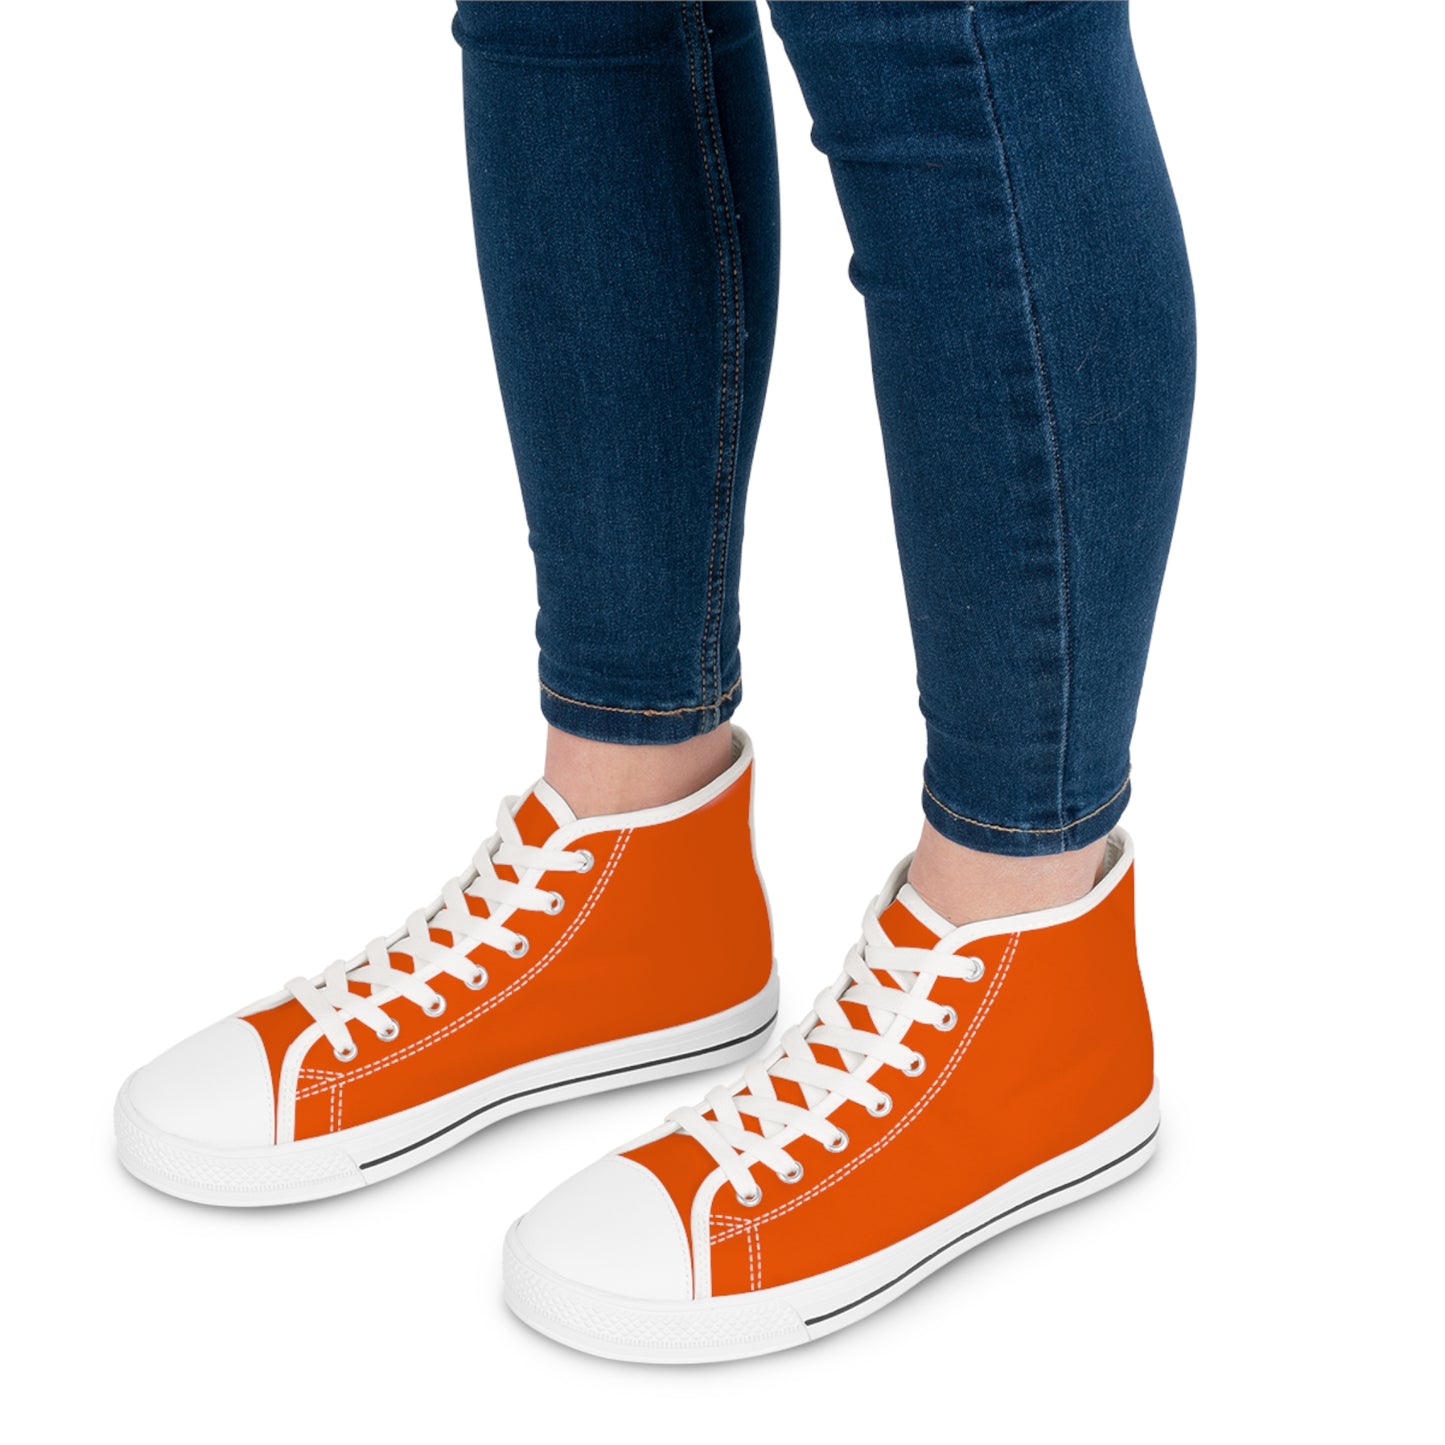 Women's High Top Sneakers - Dark Orange US 12 White sole